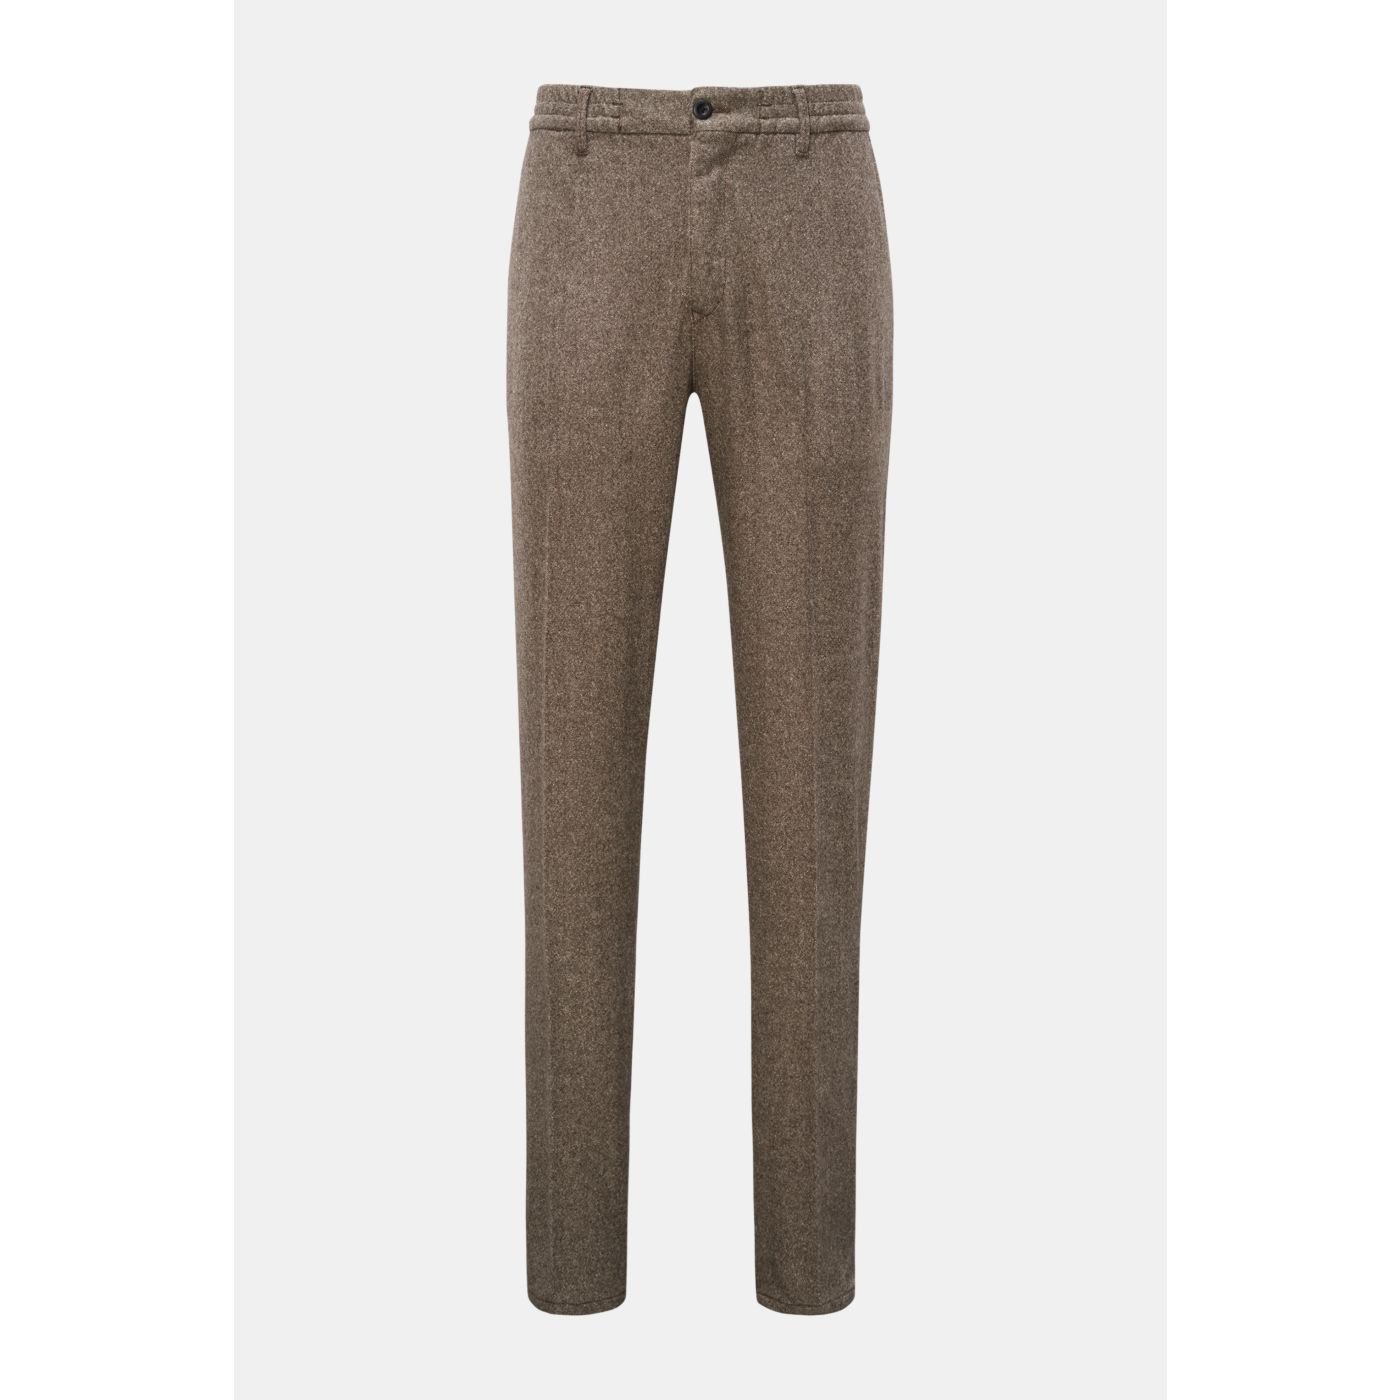 INCOTEX SLACKS flannel grey-brown BRAUN | Hamburg jogger pants